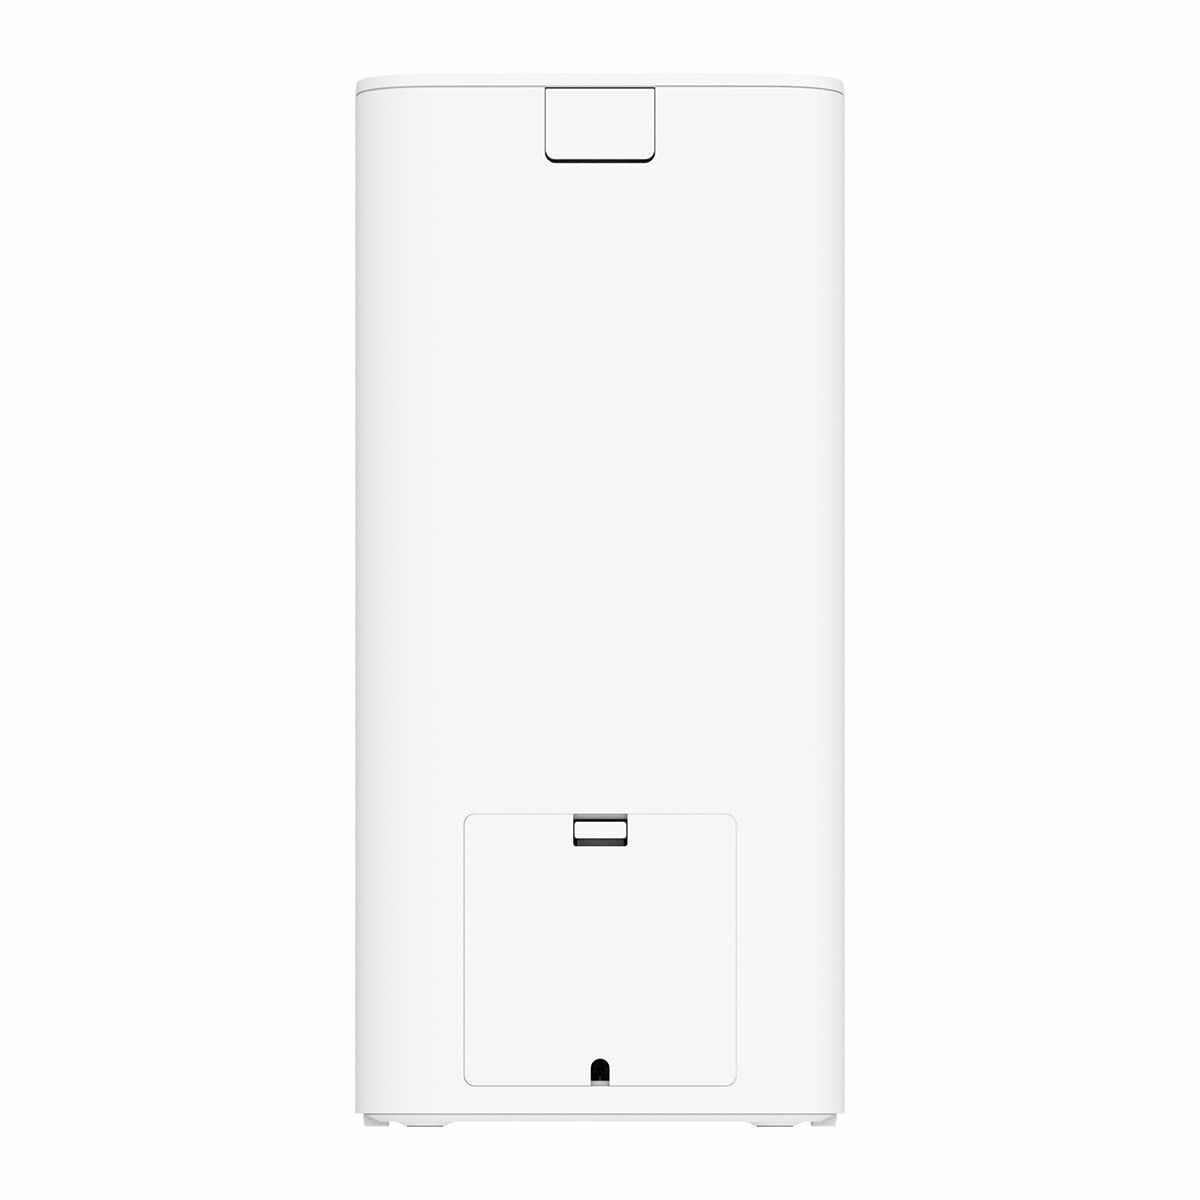 Comedero automático Xiaomi XWPF01MG-EU 1,8 kg Blanco